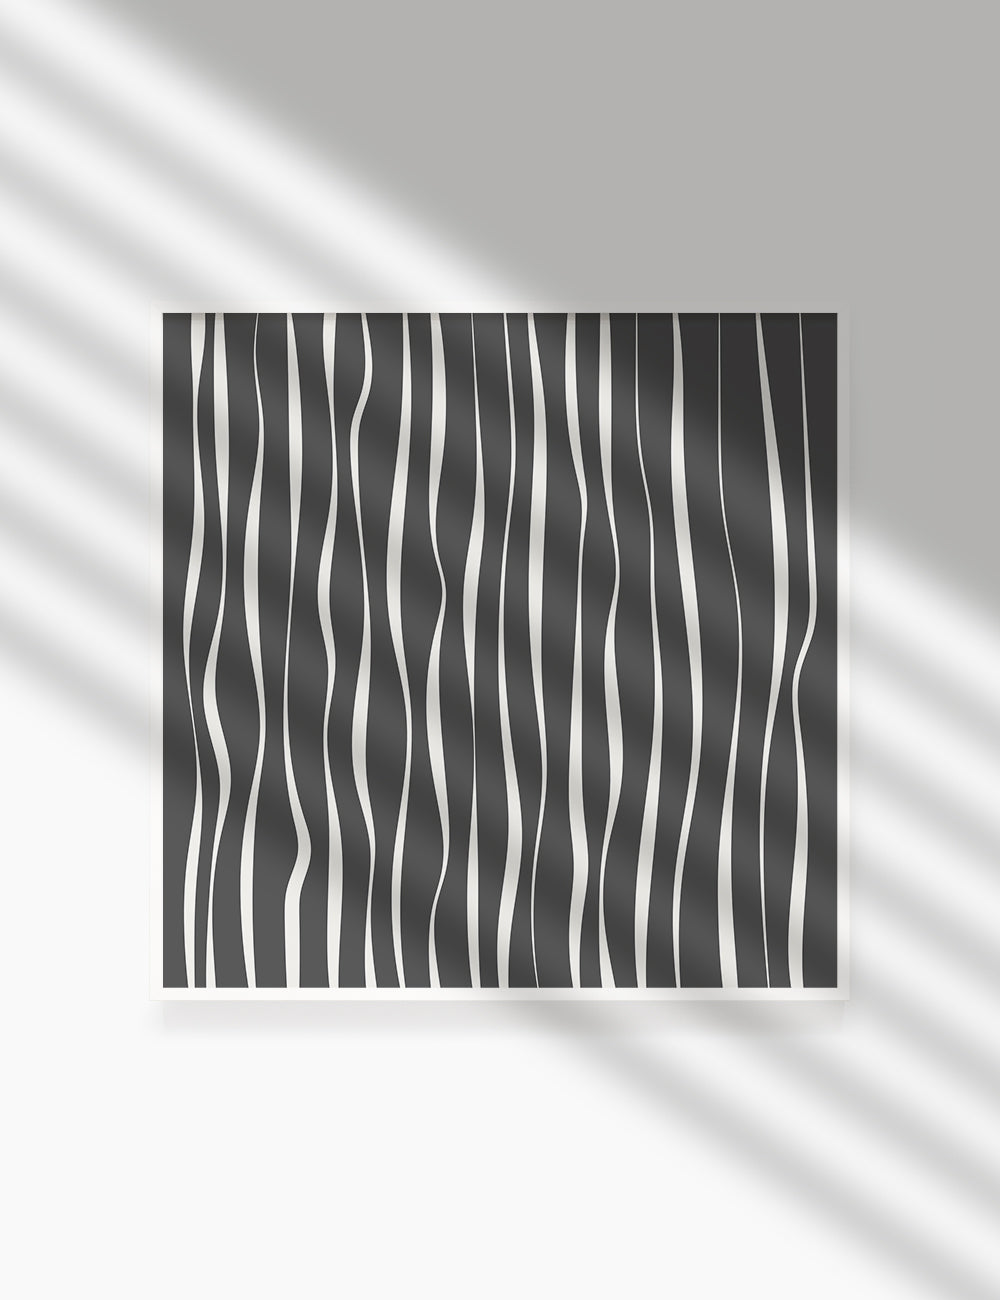 ABSTRACT MINIMAL WAVY LINES. Boho Art. Print. Printable Wall Art Illustration. Wavy lines in dark grey and beige. Abstract art. Minimal design. Minimalist, abstract illustration art. Printable poster. | PAPER MOON Art & Design